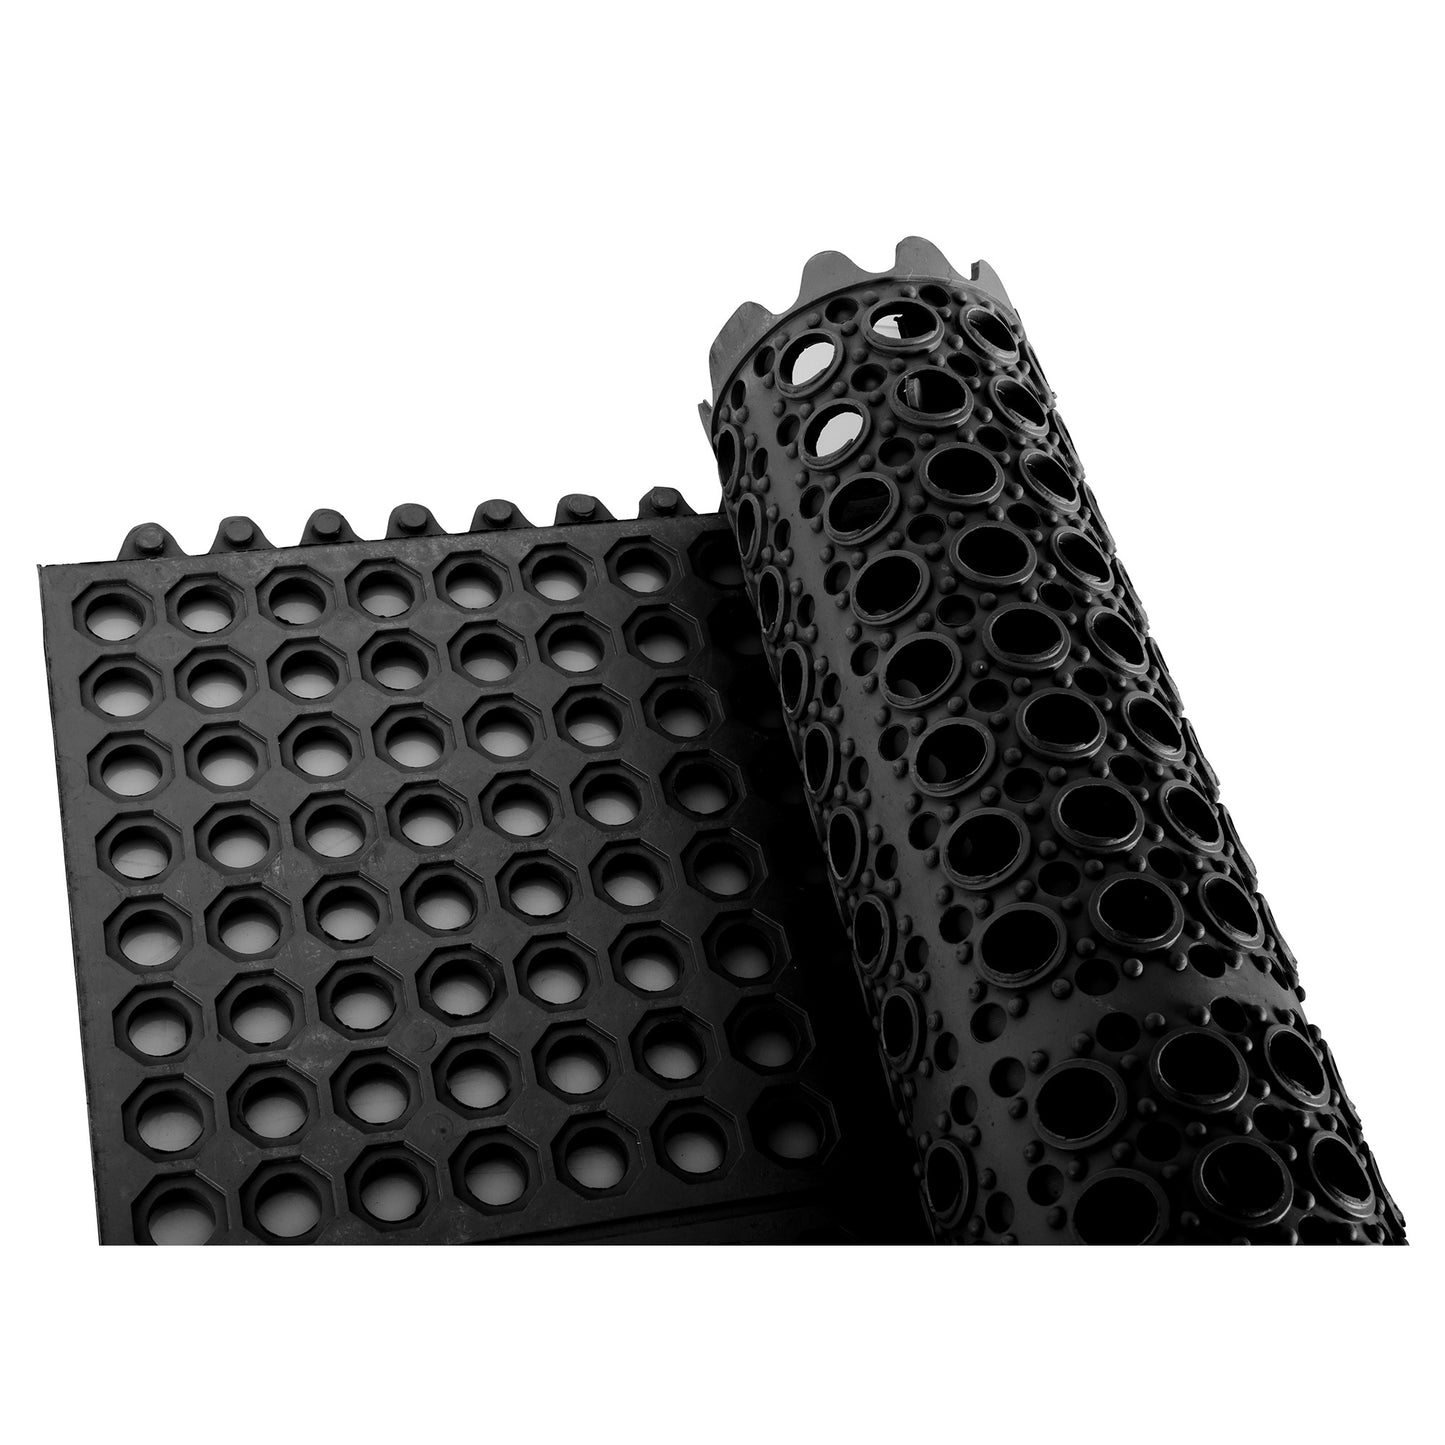 RBMI-33K - Rubber Interlocking Floor Mat, 3' x 3' - Black